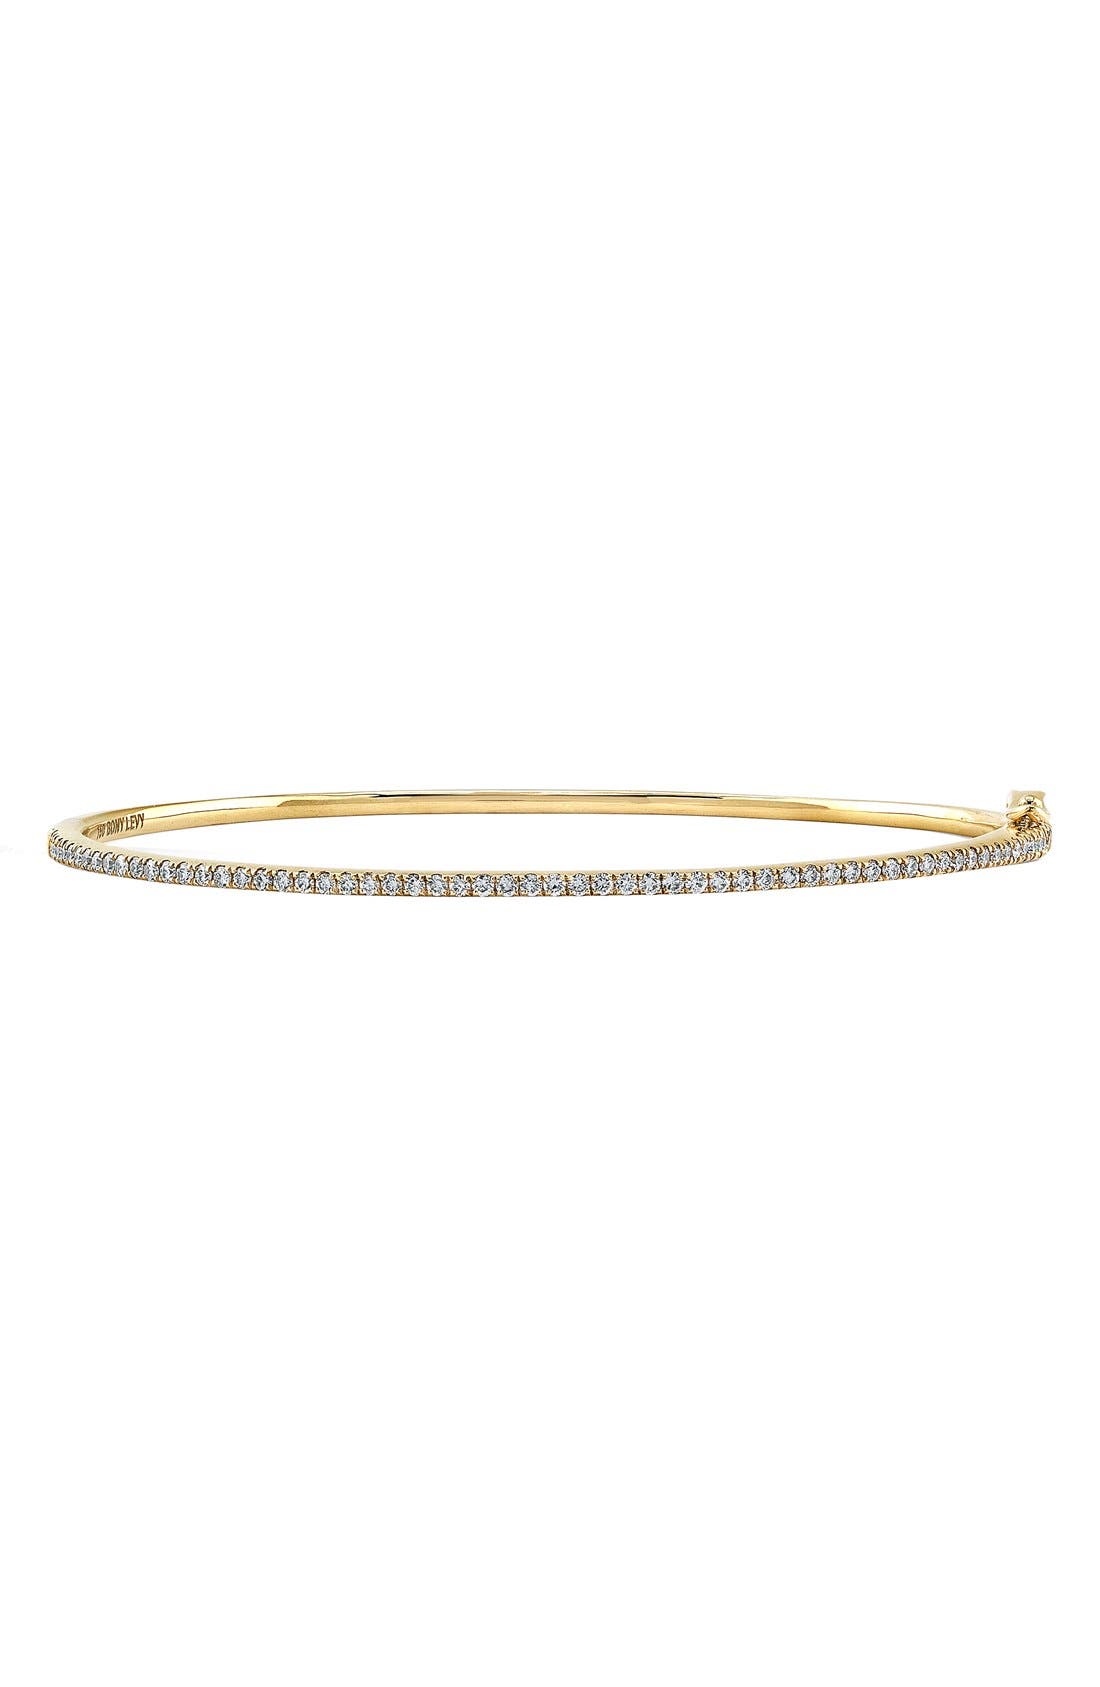 thin gold bracelet with diamond